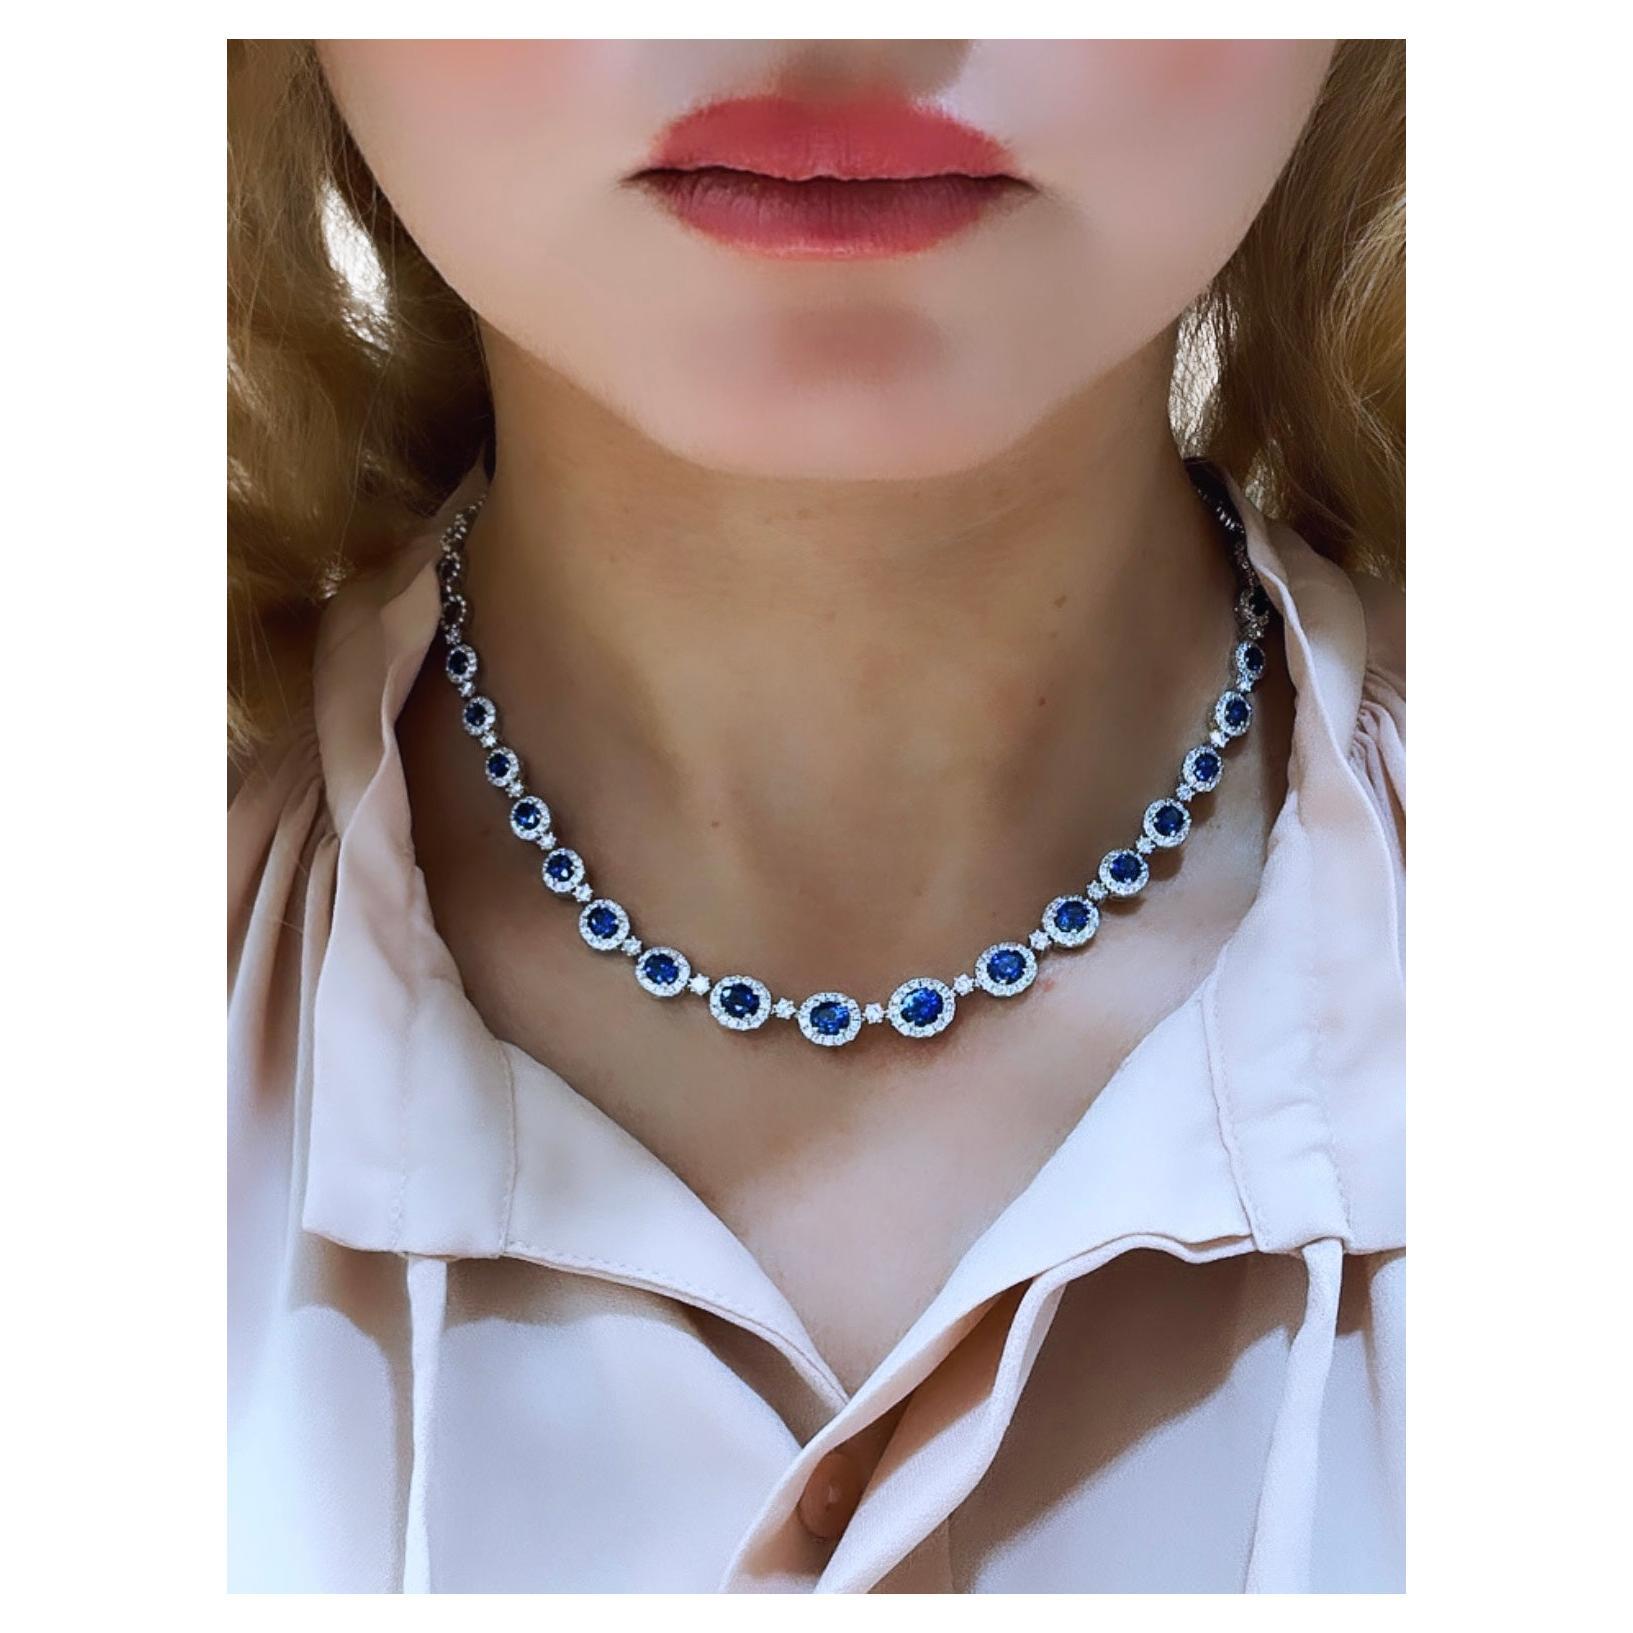 10.14carat Royal Blue Sapphire Diamond Statement Necklace For Sale